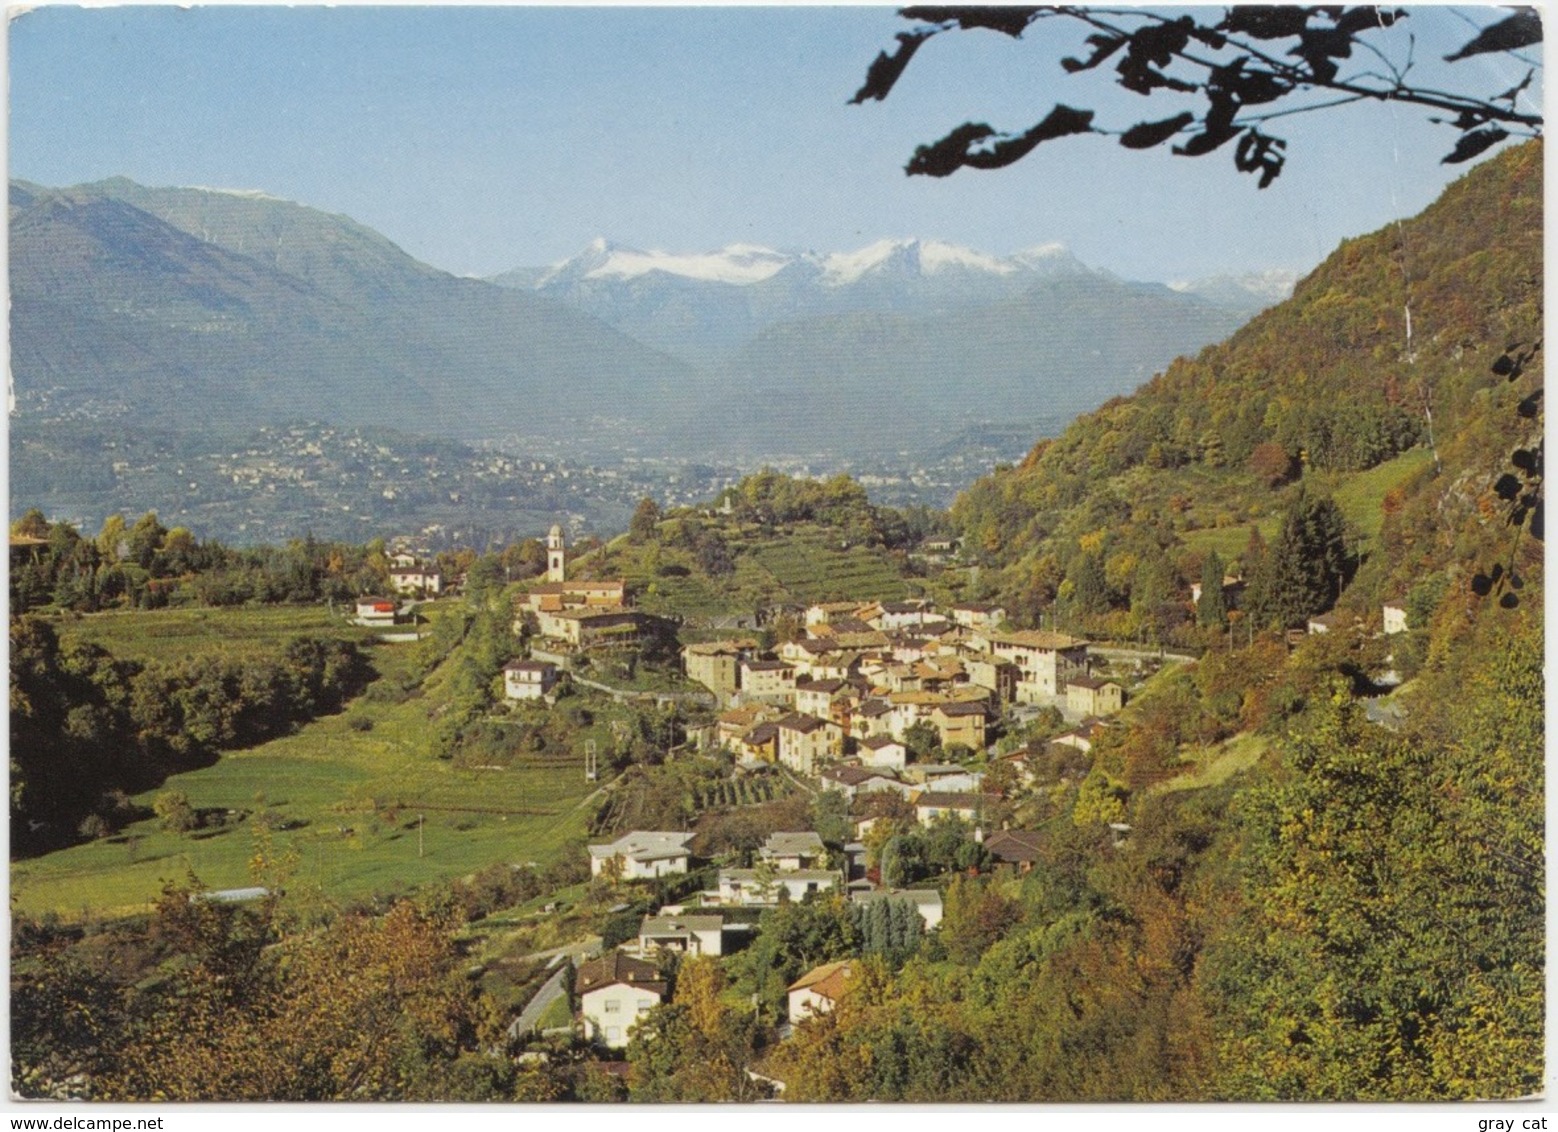 Carabbia, Presso Lugano, Switzerland, 1983 Used Postcard [21940] - Lugano